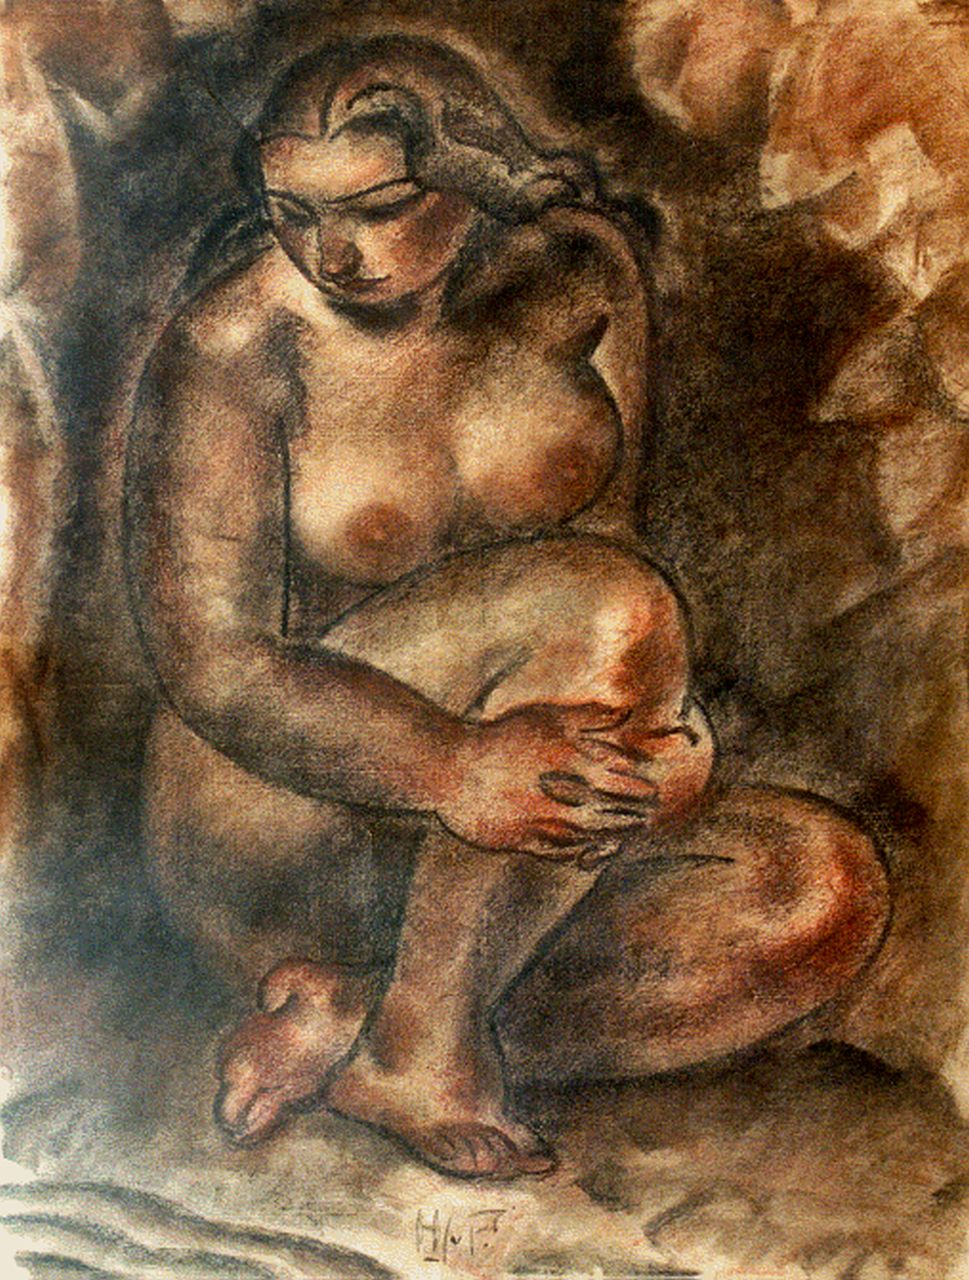 Piggelen H.J. van | H.J. van Piggelen, Seated nude, pastel on paper 613.0 x 47.0 cm, signed l.m.